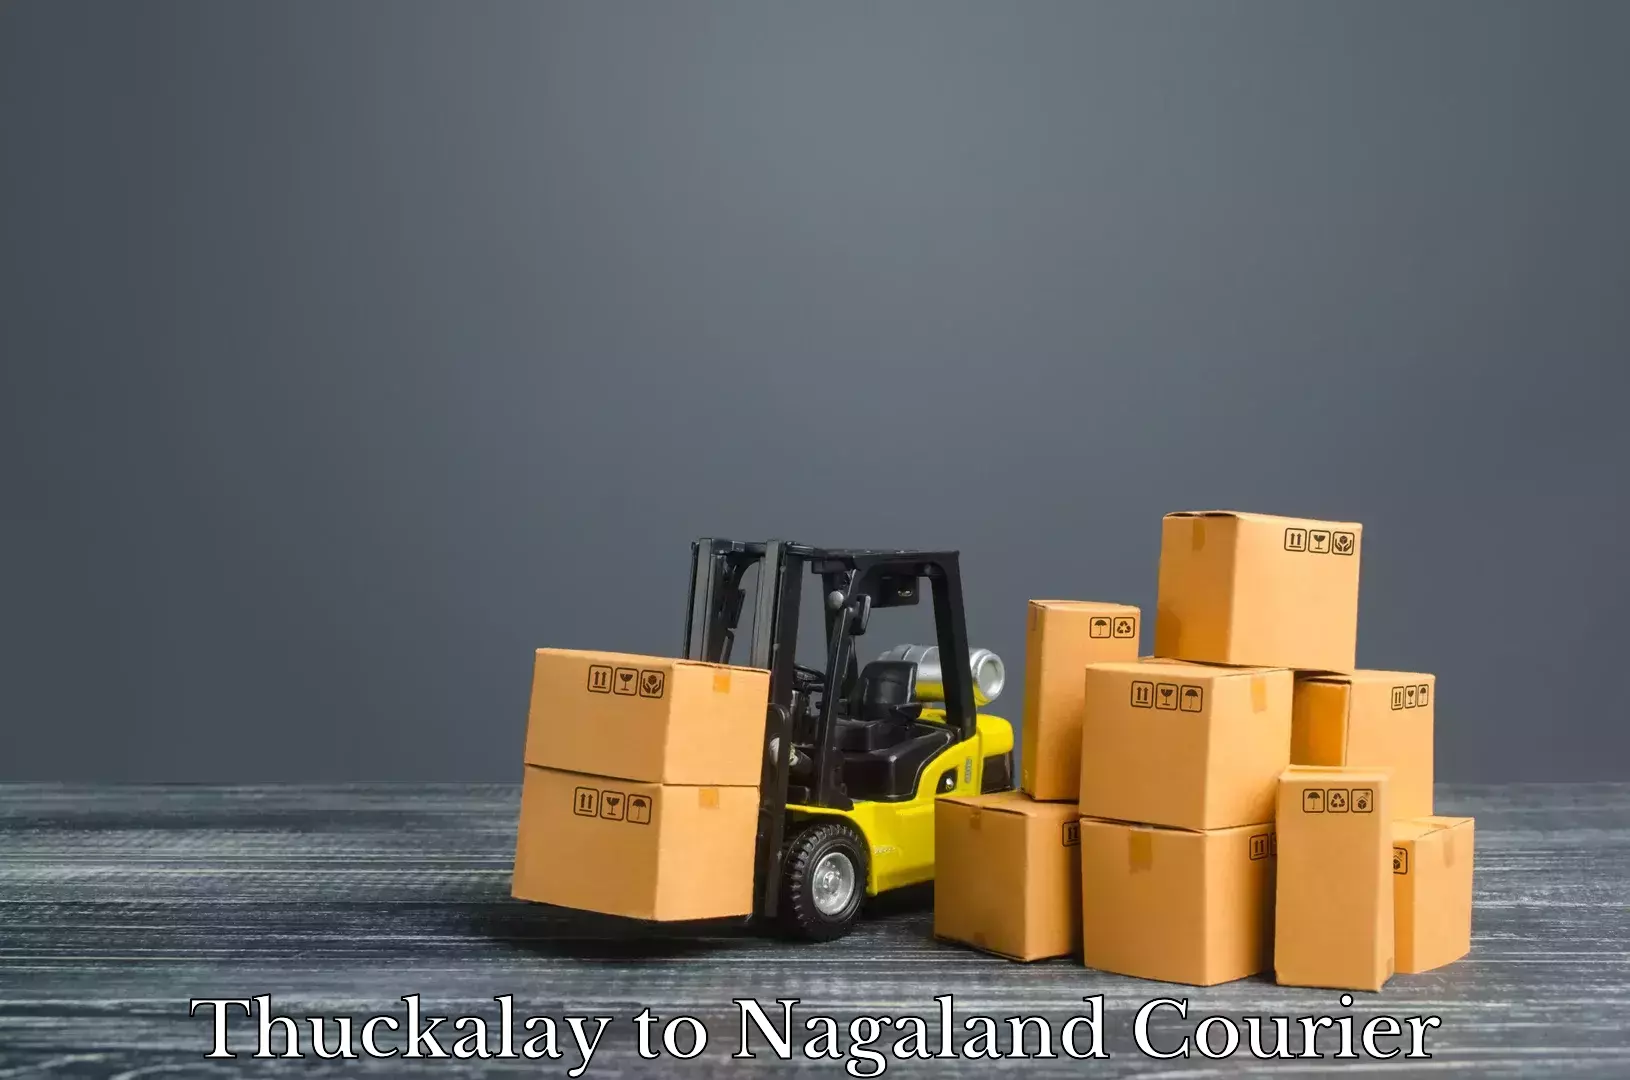 Luggage shipment processing Thuckalay to Nagaland